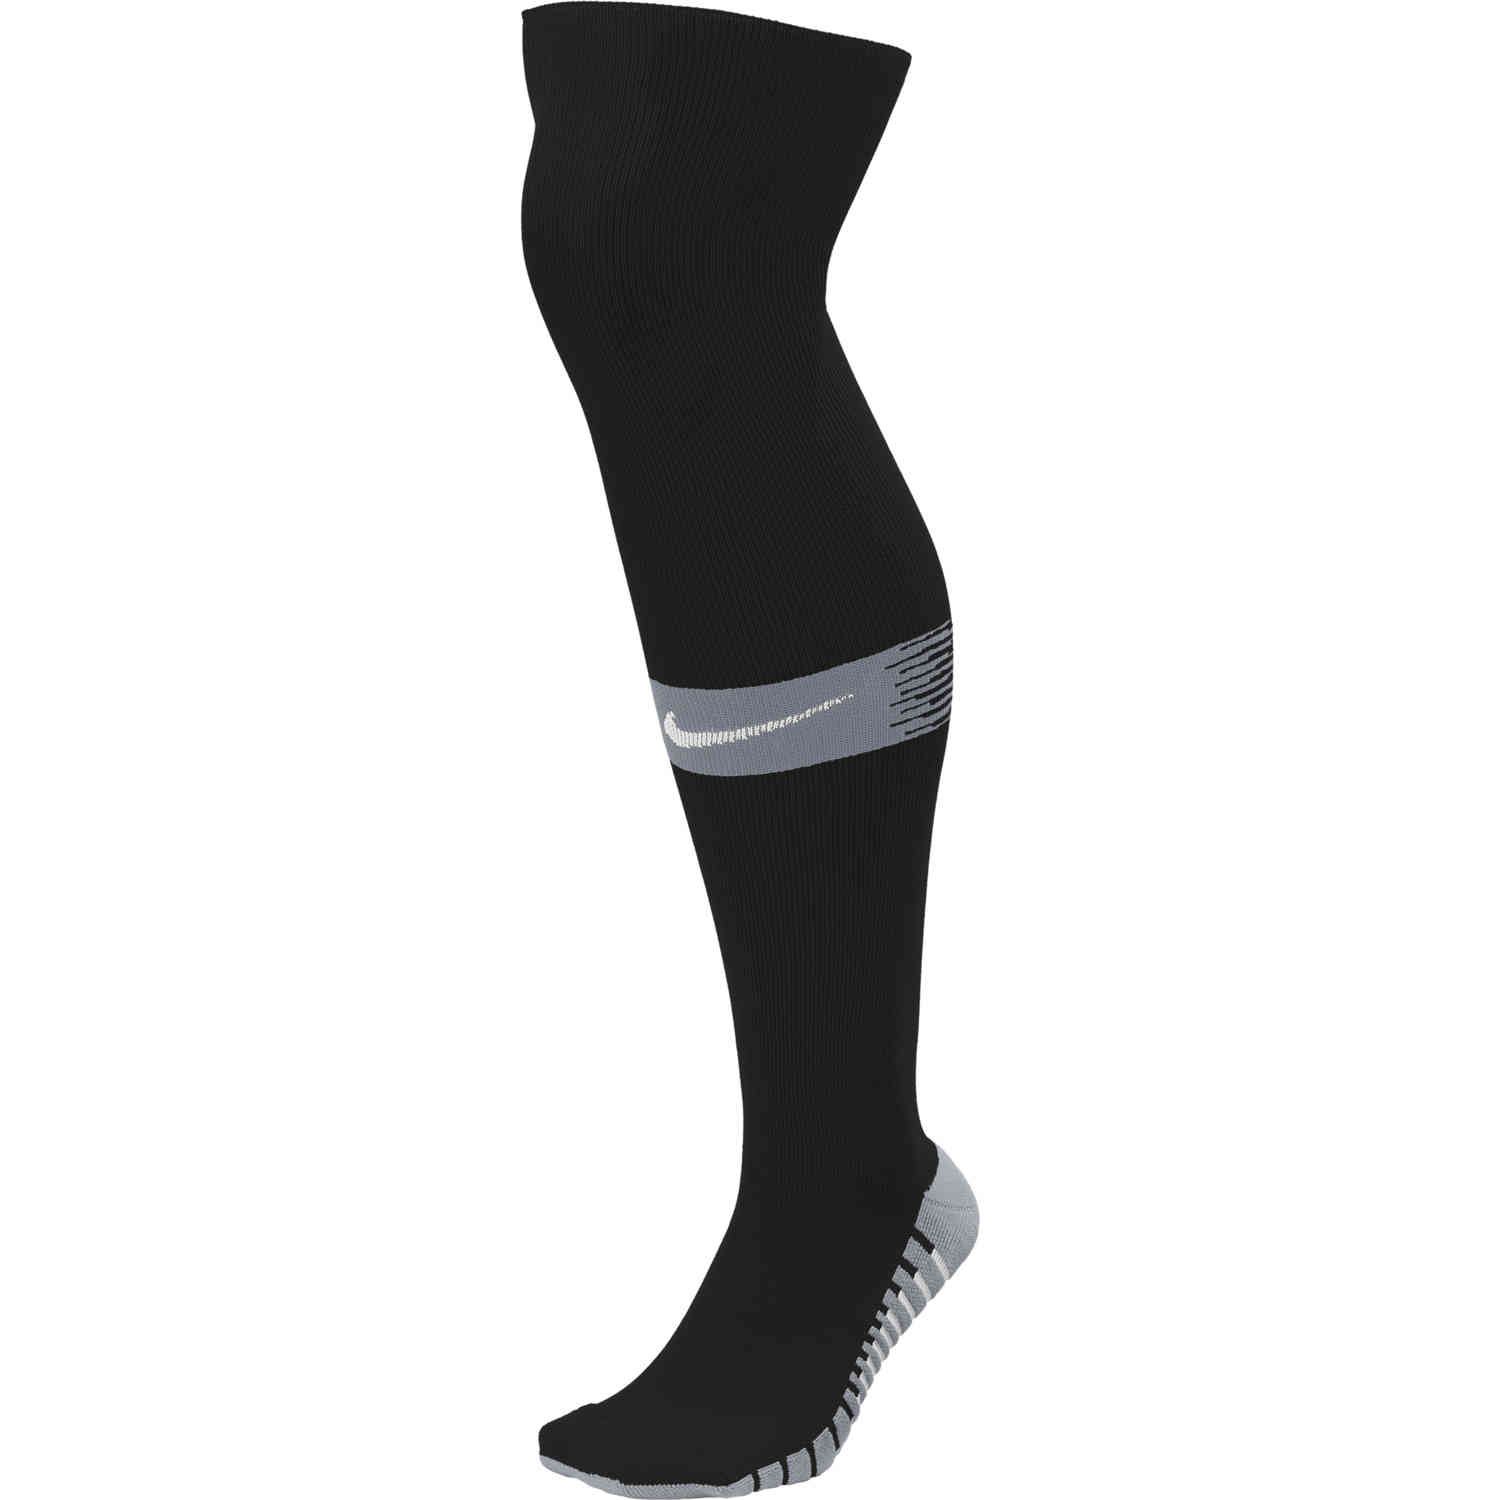 Nike Team Matchfit Soccer Socks - Black/Cool Grey - SoccerPro